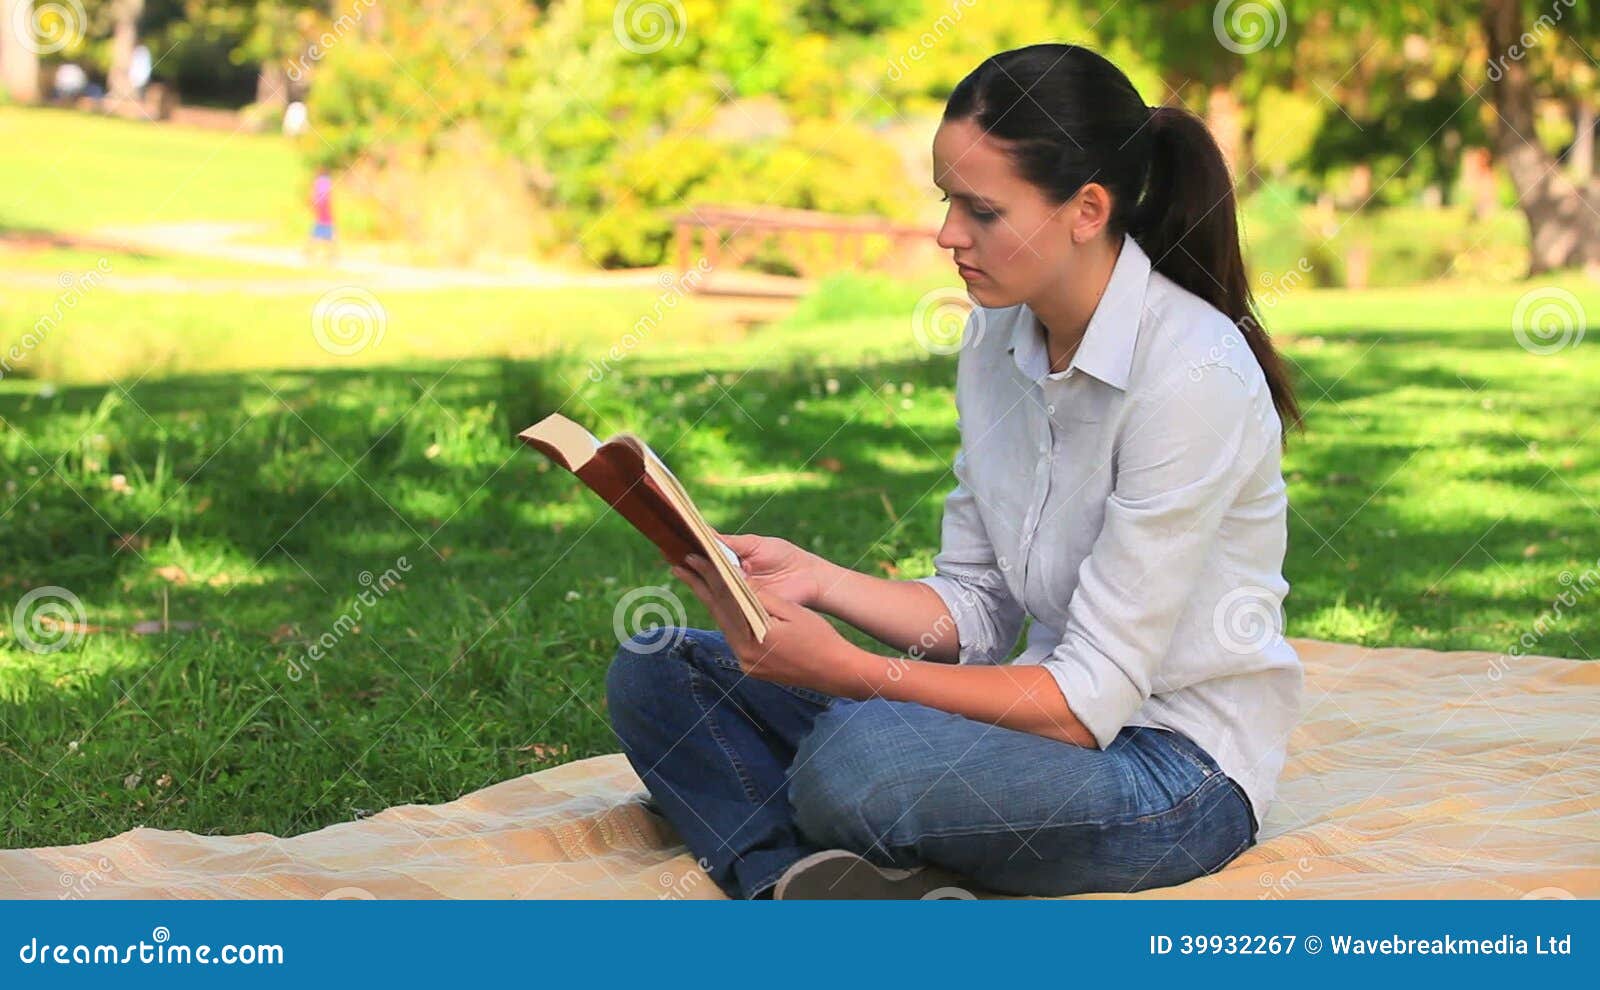 She s reading now. Наслаждение книгой. Woman reading book. Woman шт skirt sitting on the steps and reading a book. Чтение книги Сток видео.